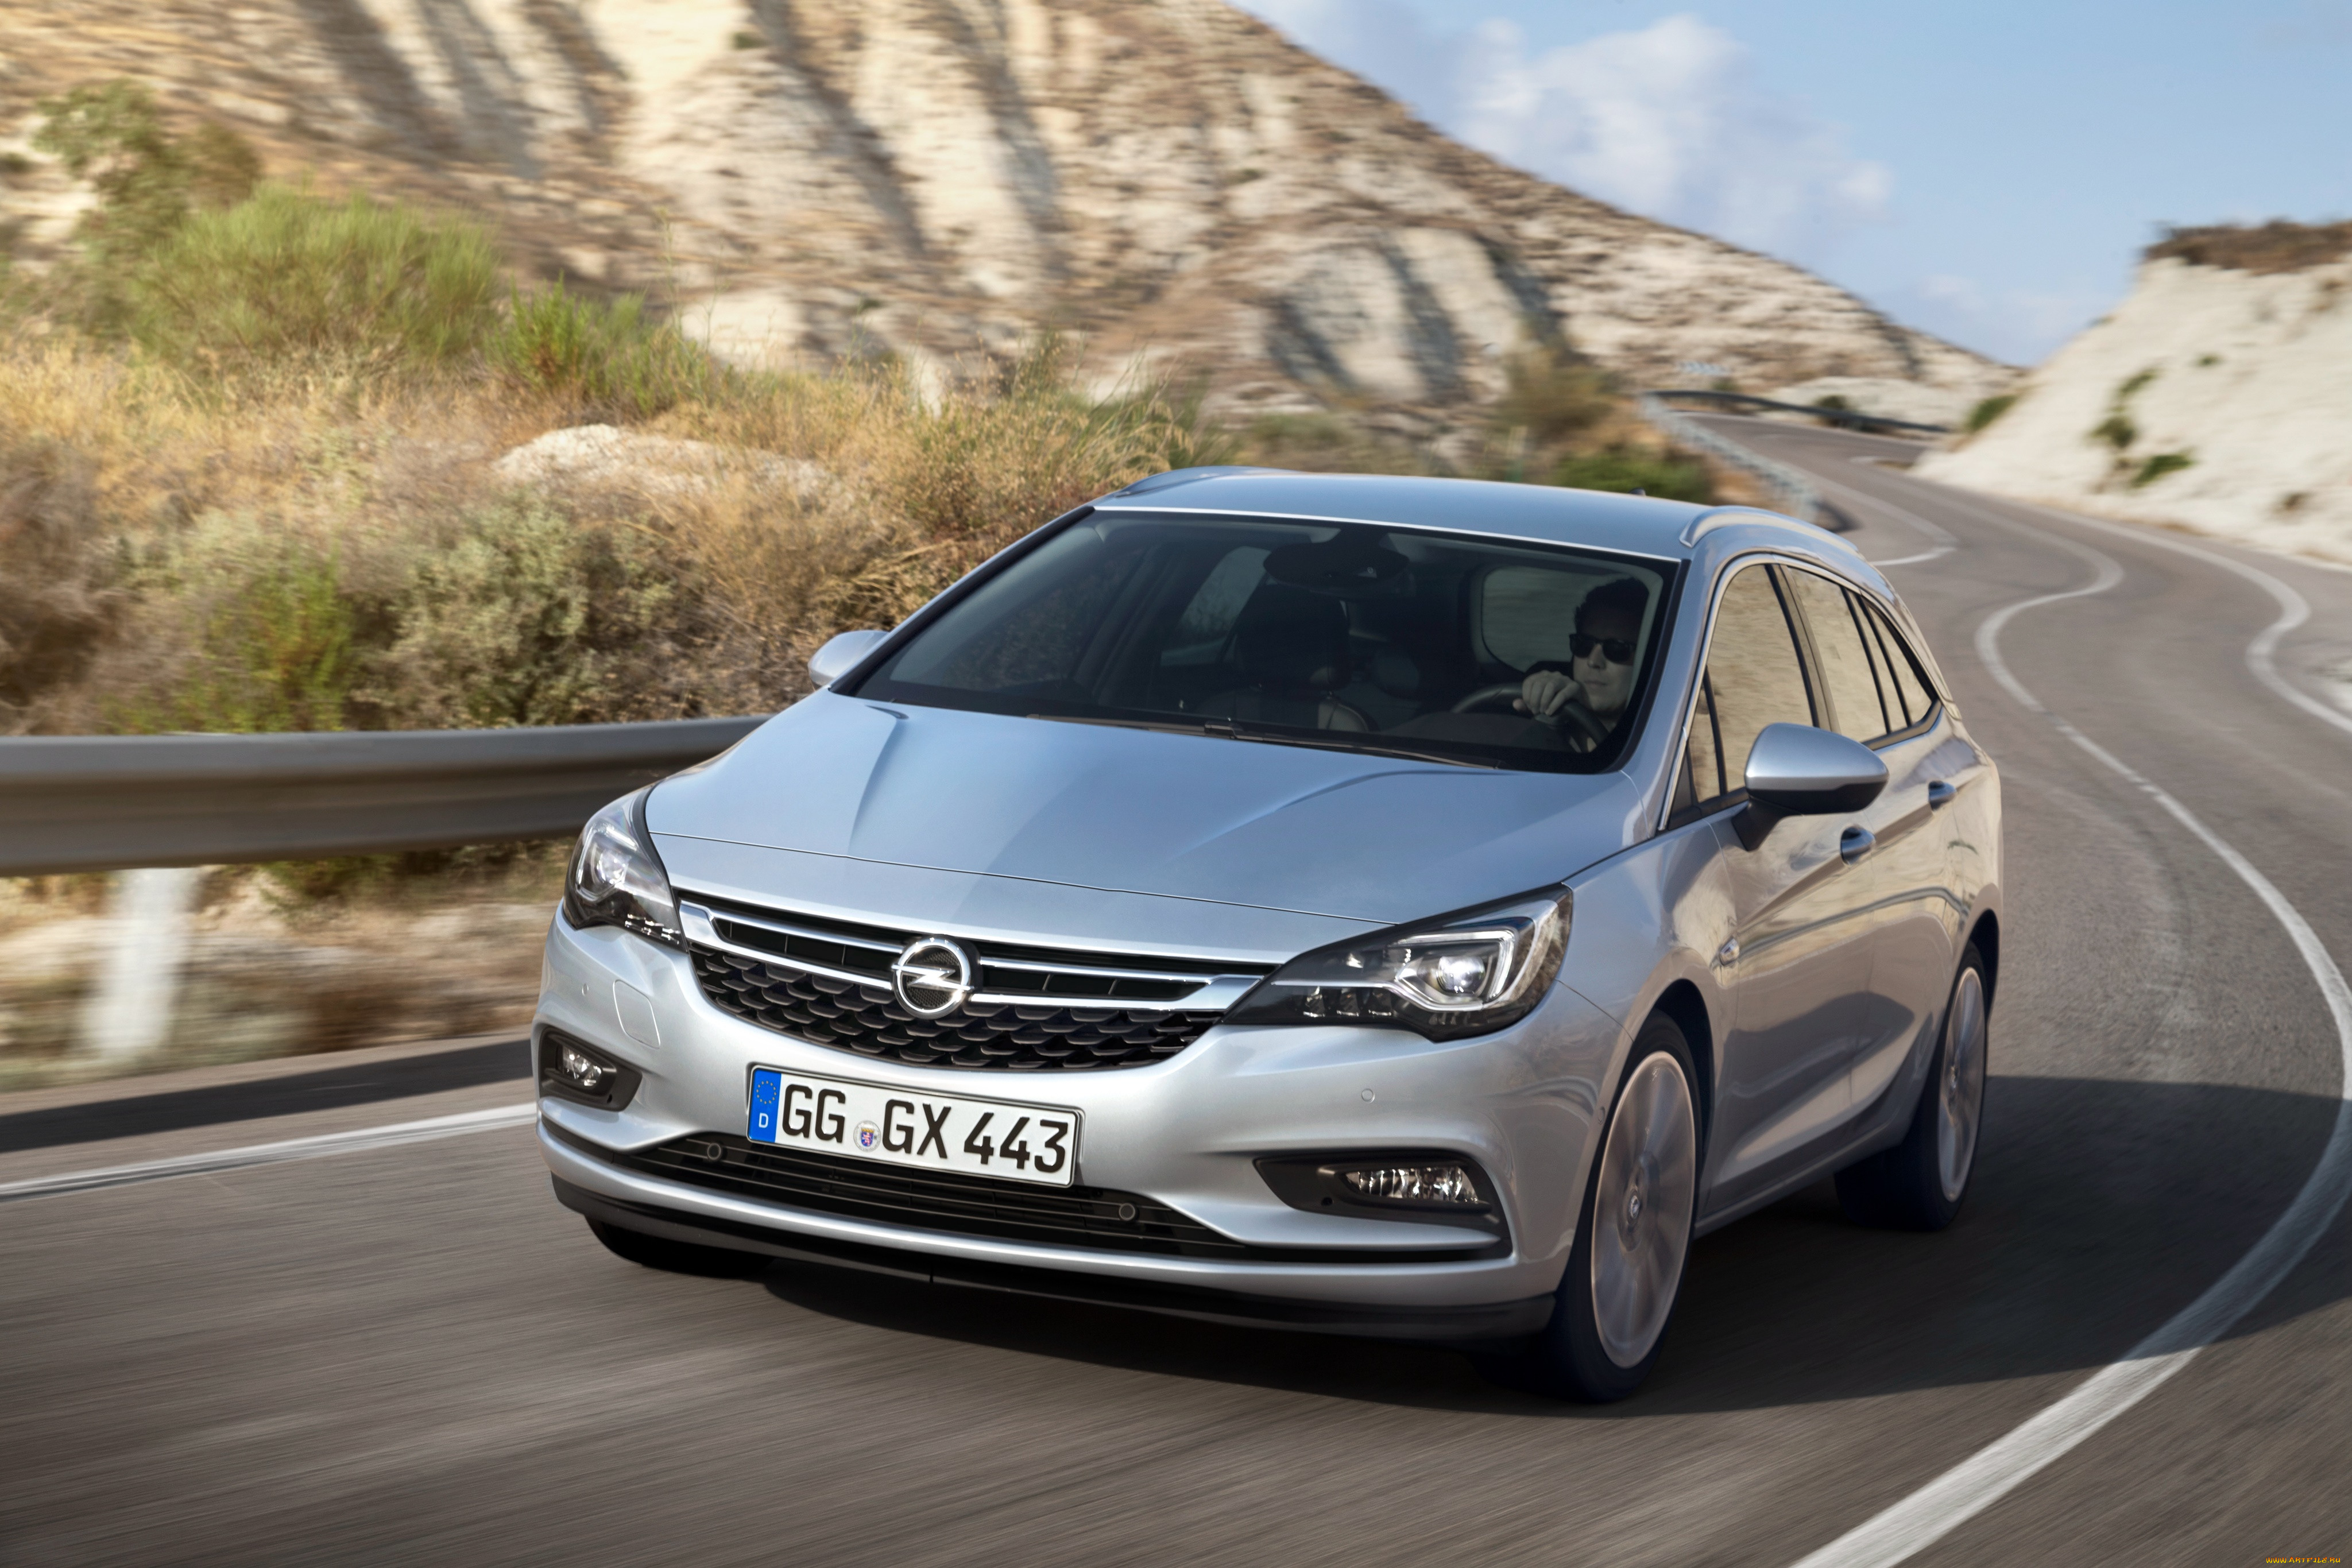 Купить б у opel. Opel Astra 2015. Opel Astra 1.6 2015. Opel Astra k 2015.